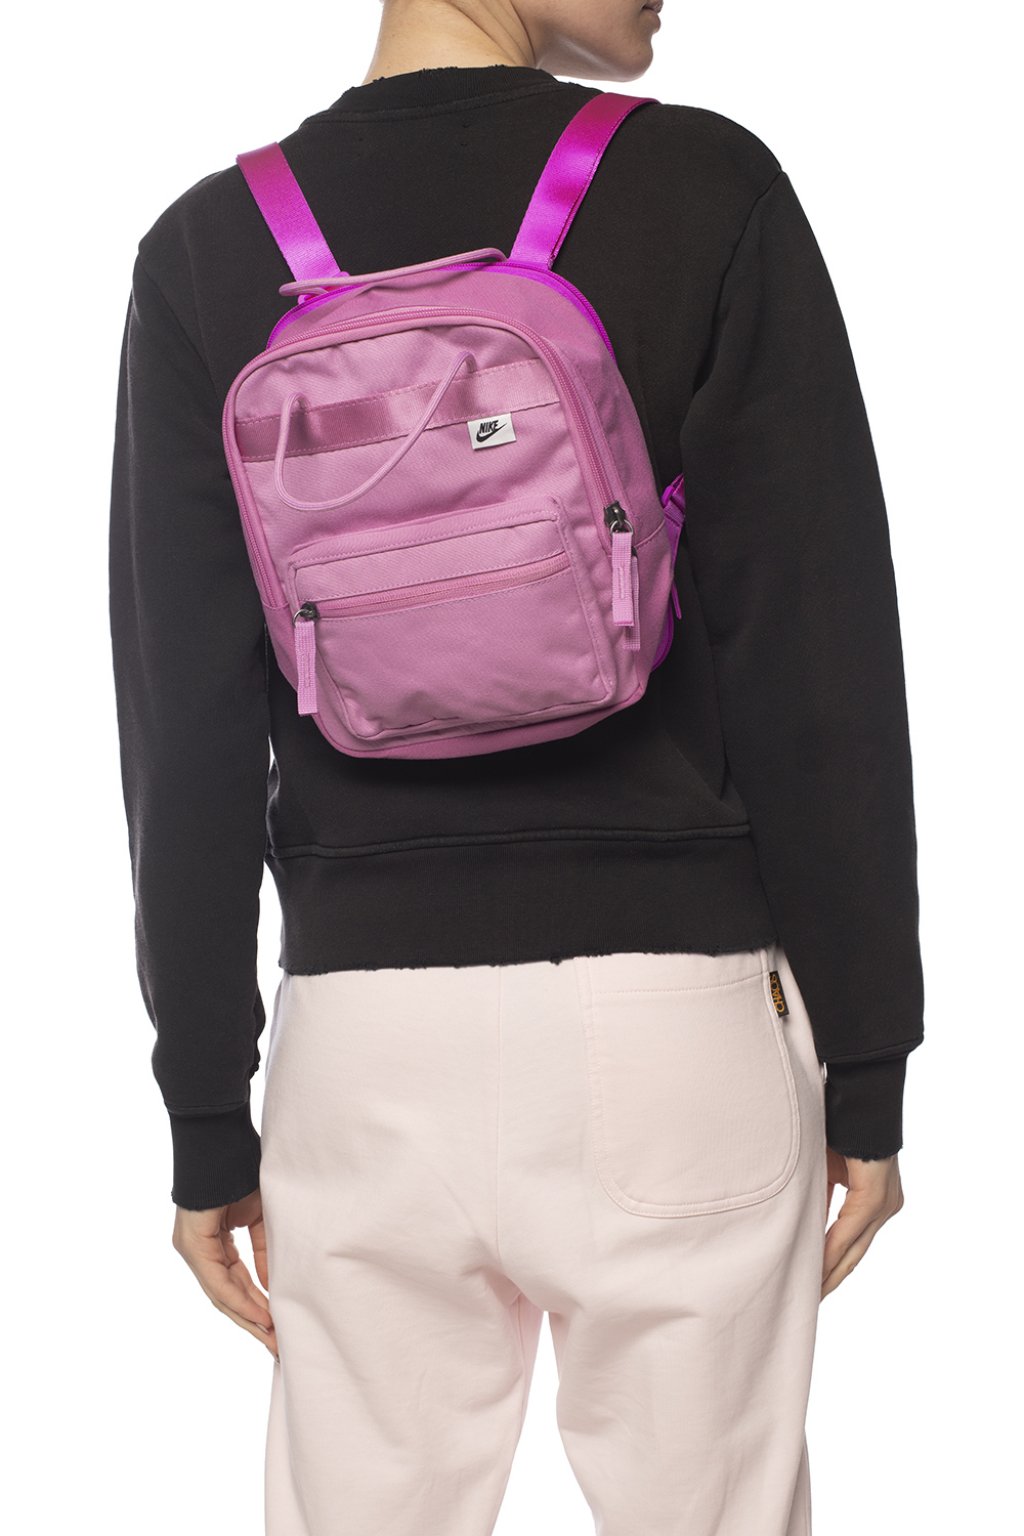 Tanjun' backpack with logo Nike 